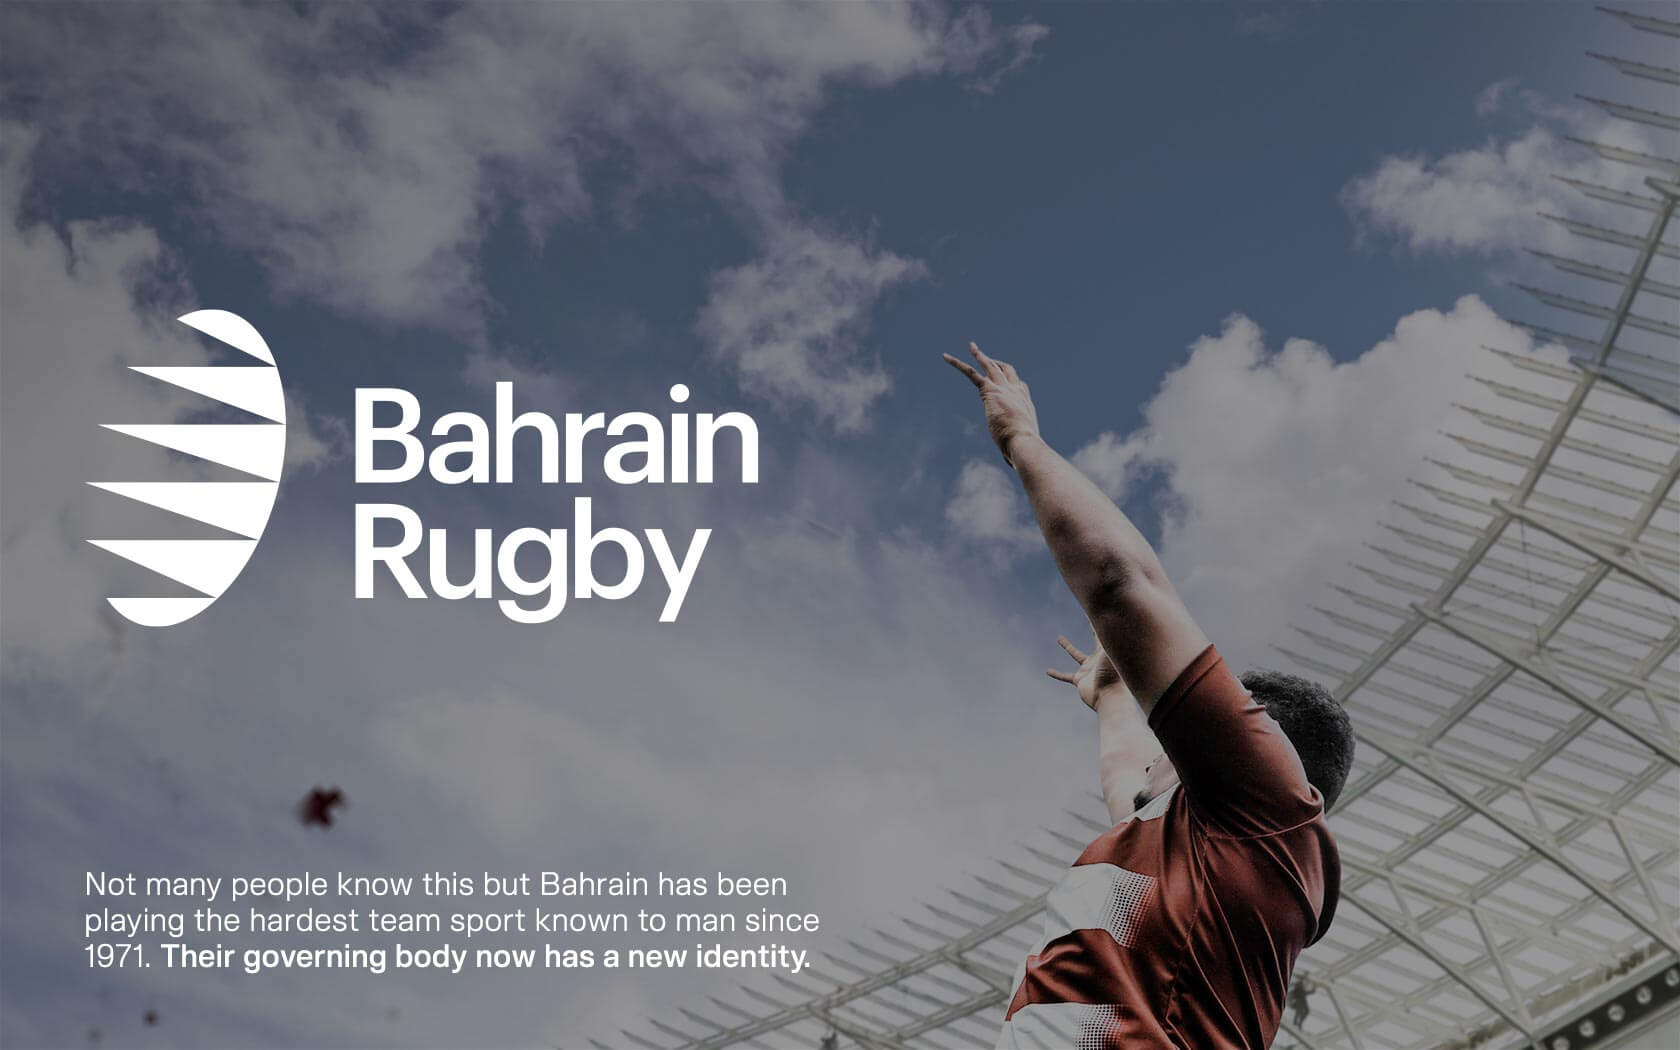 Bahrain Rugby. Brand logo in white